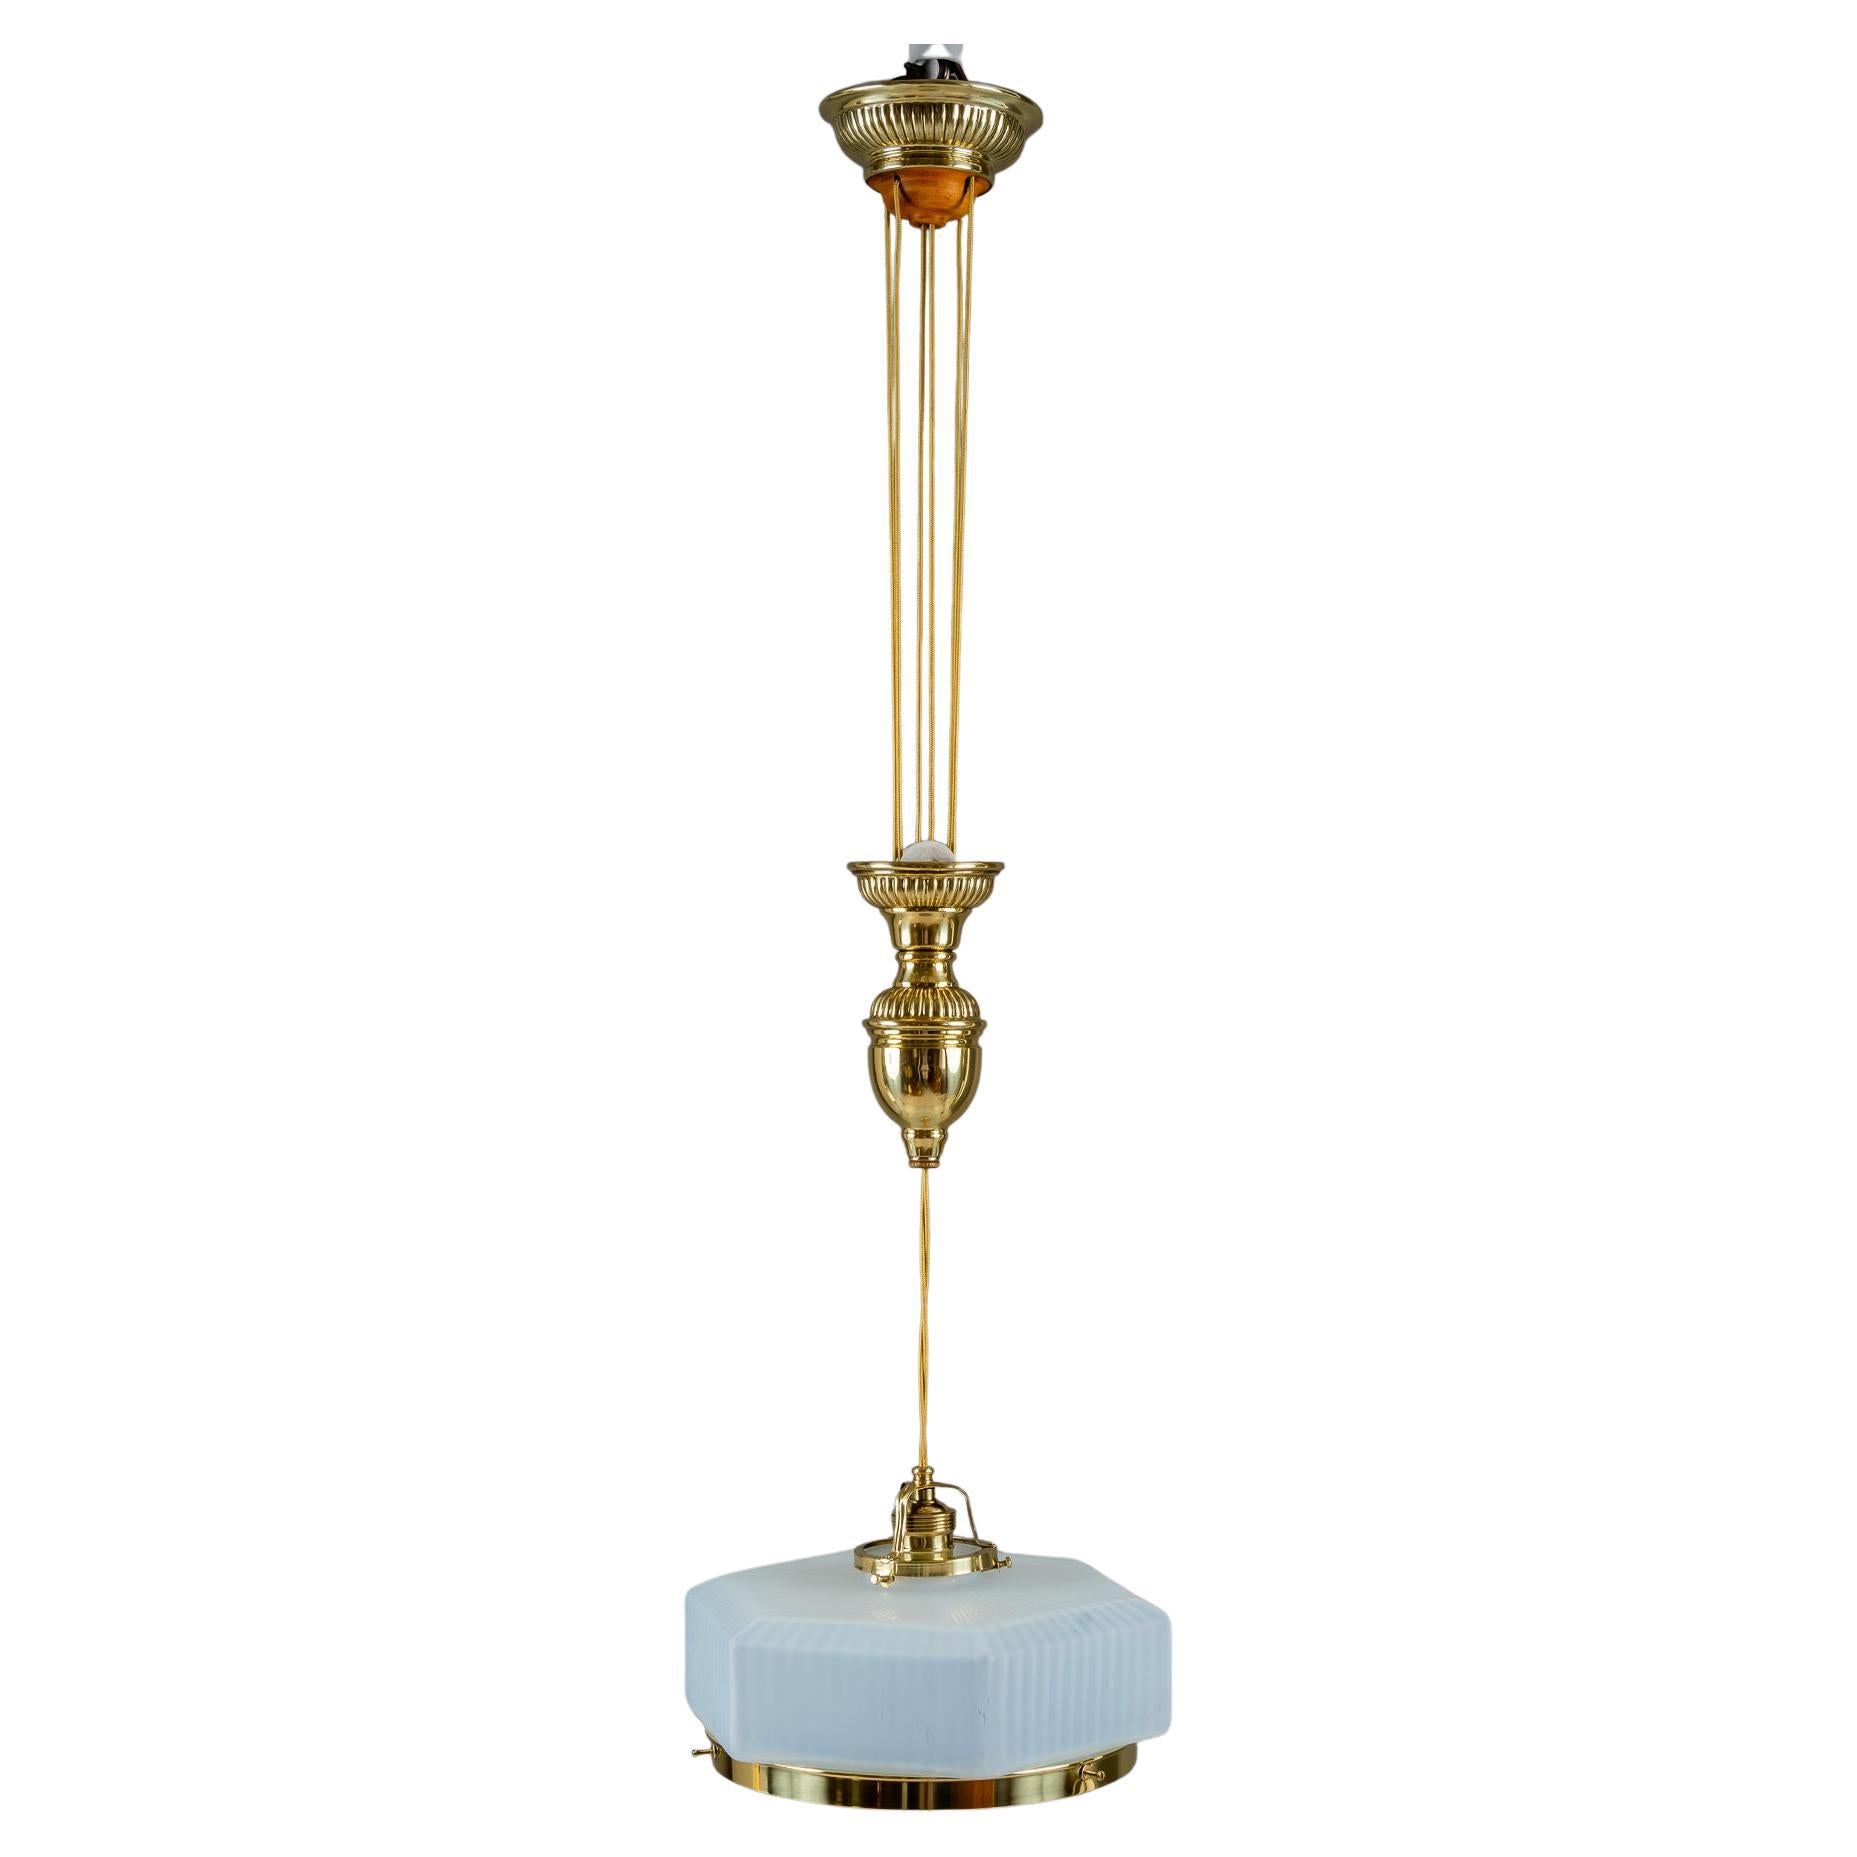 Adjustable art deco pendant vienna around with original opaline glass shade 1920